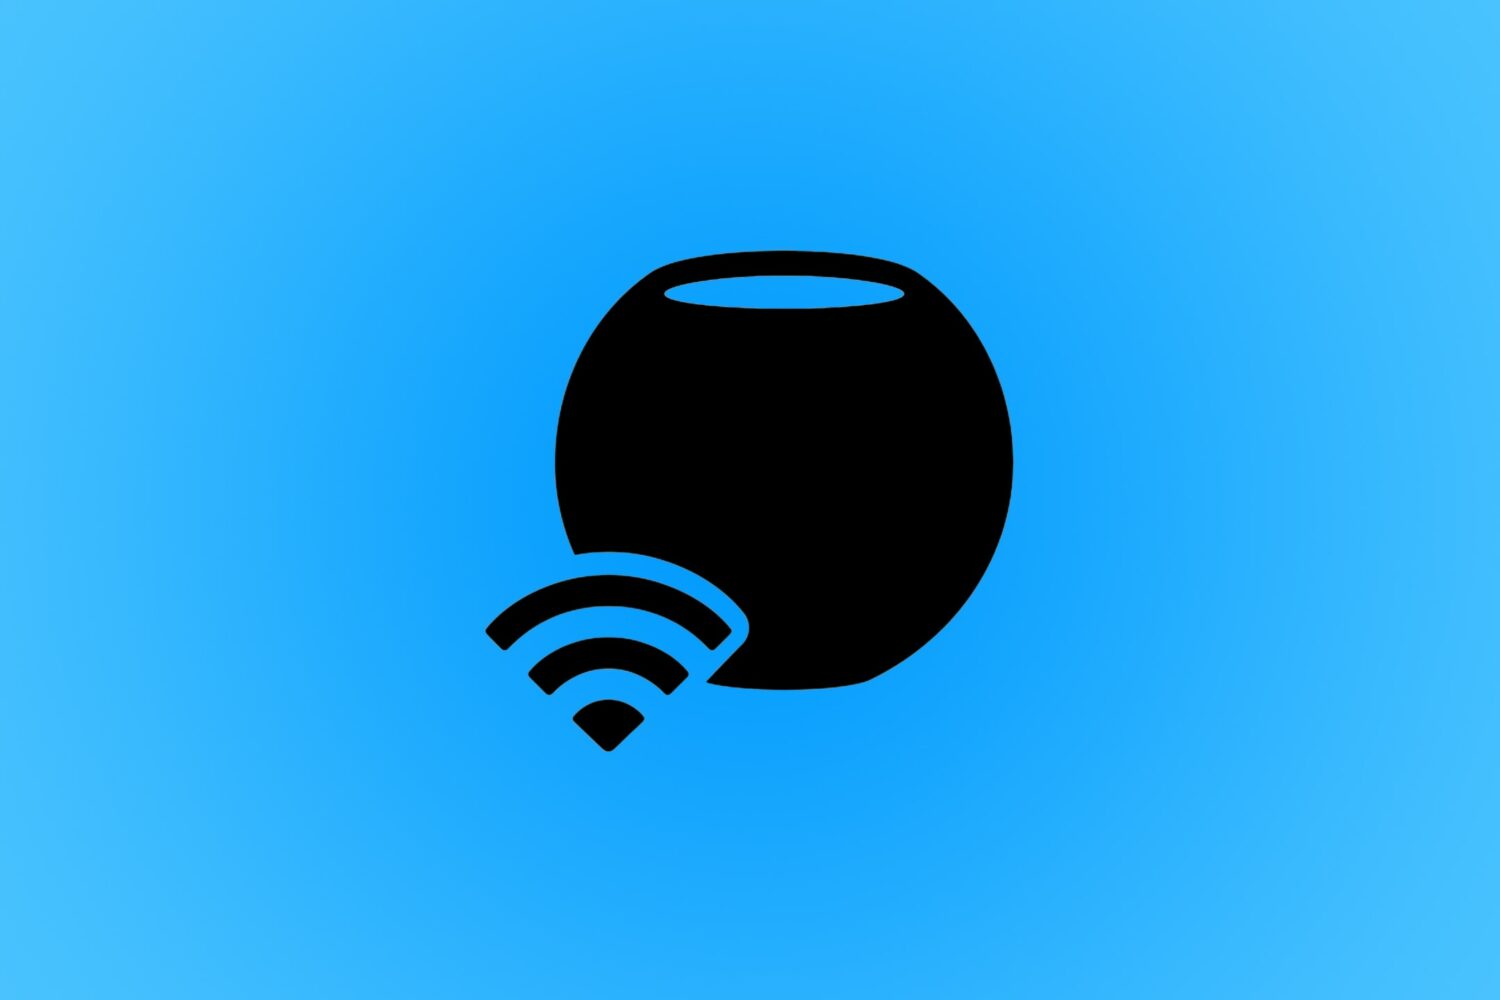 Black Wi-Fi icon next to a black HomePod mini glyph, set against a light blue gradient background